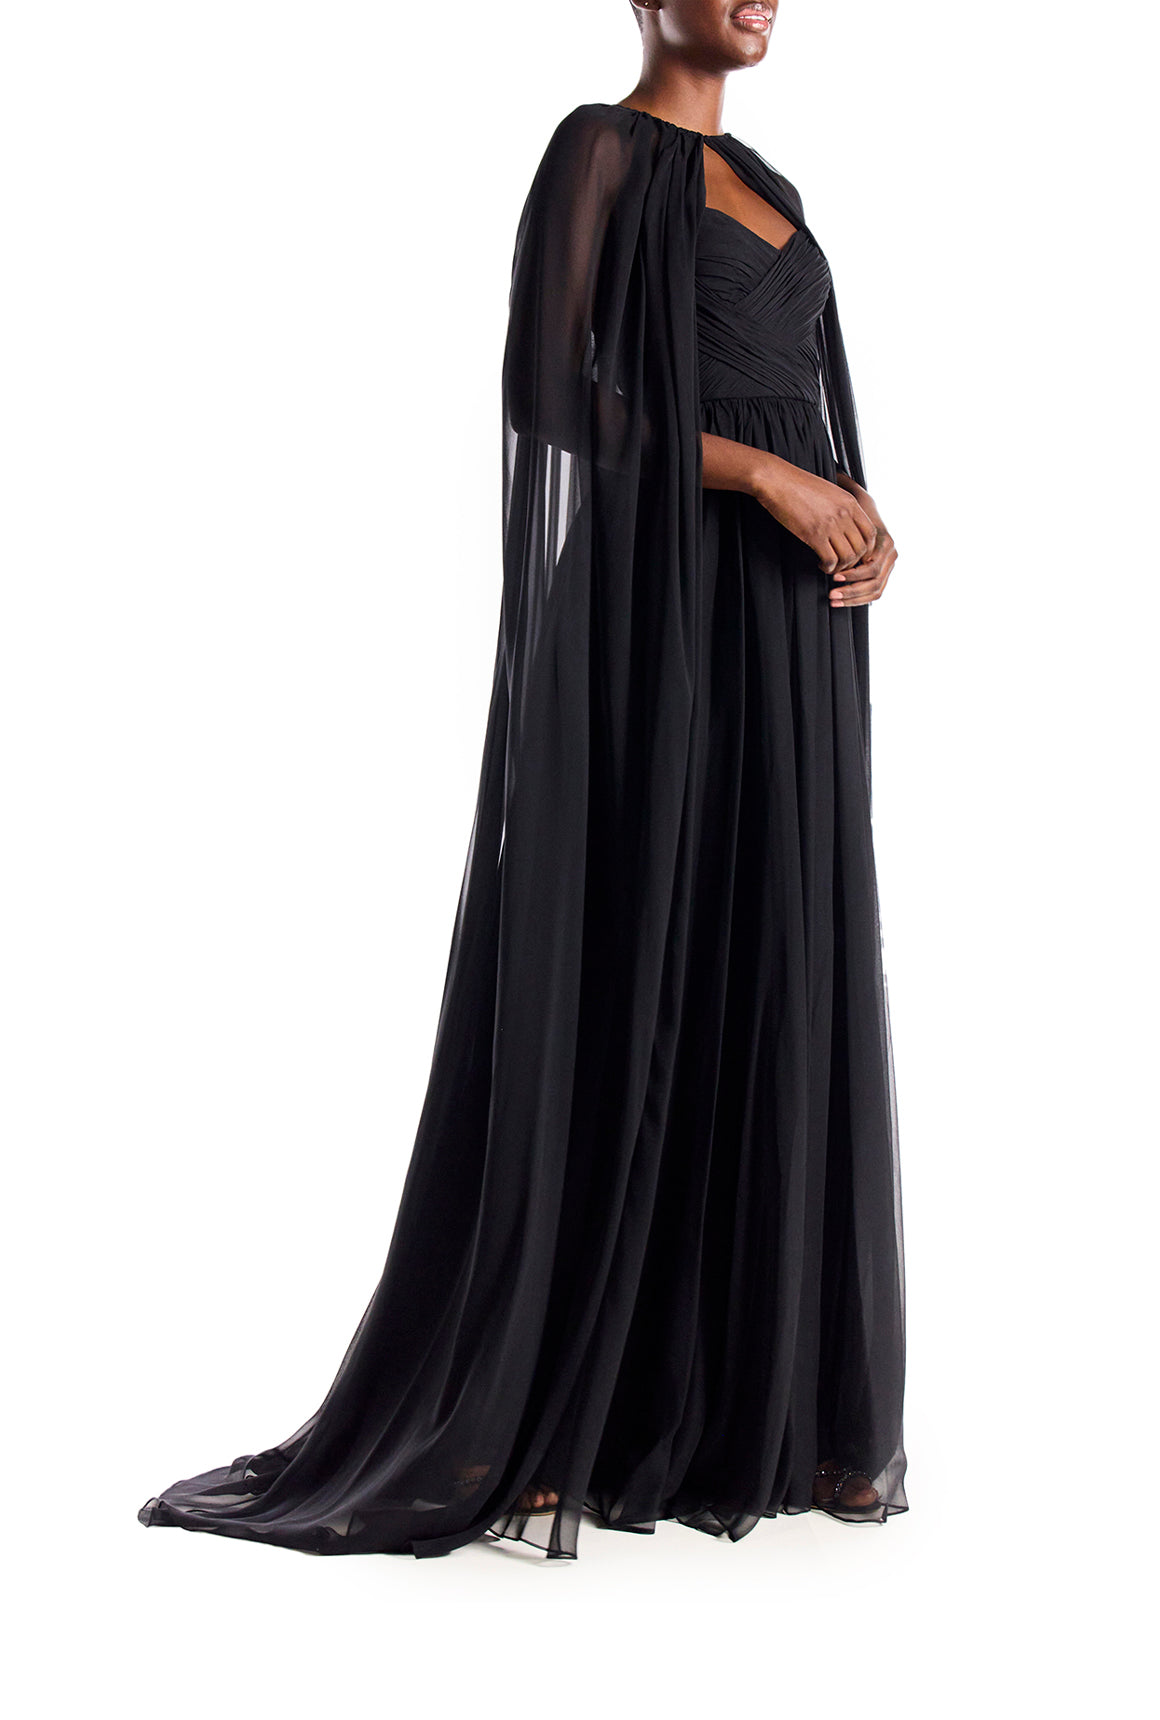 Shamna Khazim in Black Cape gown - Celebrity Closet